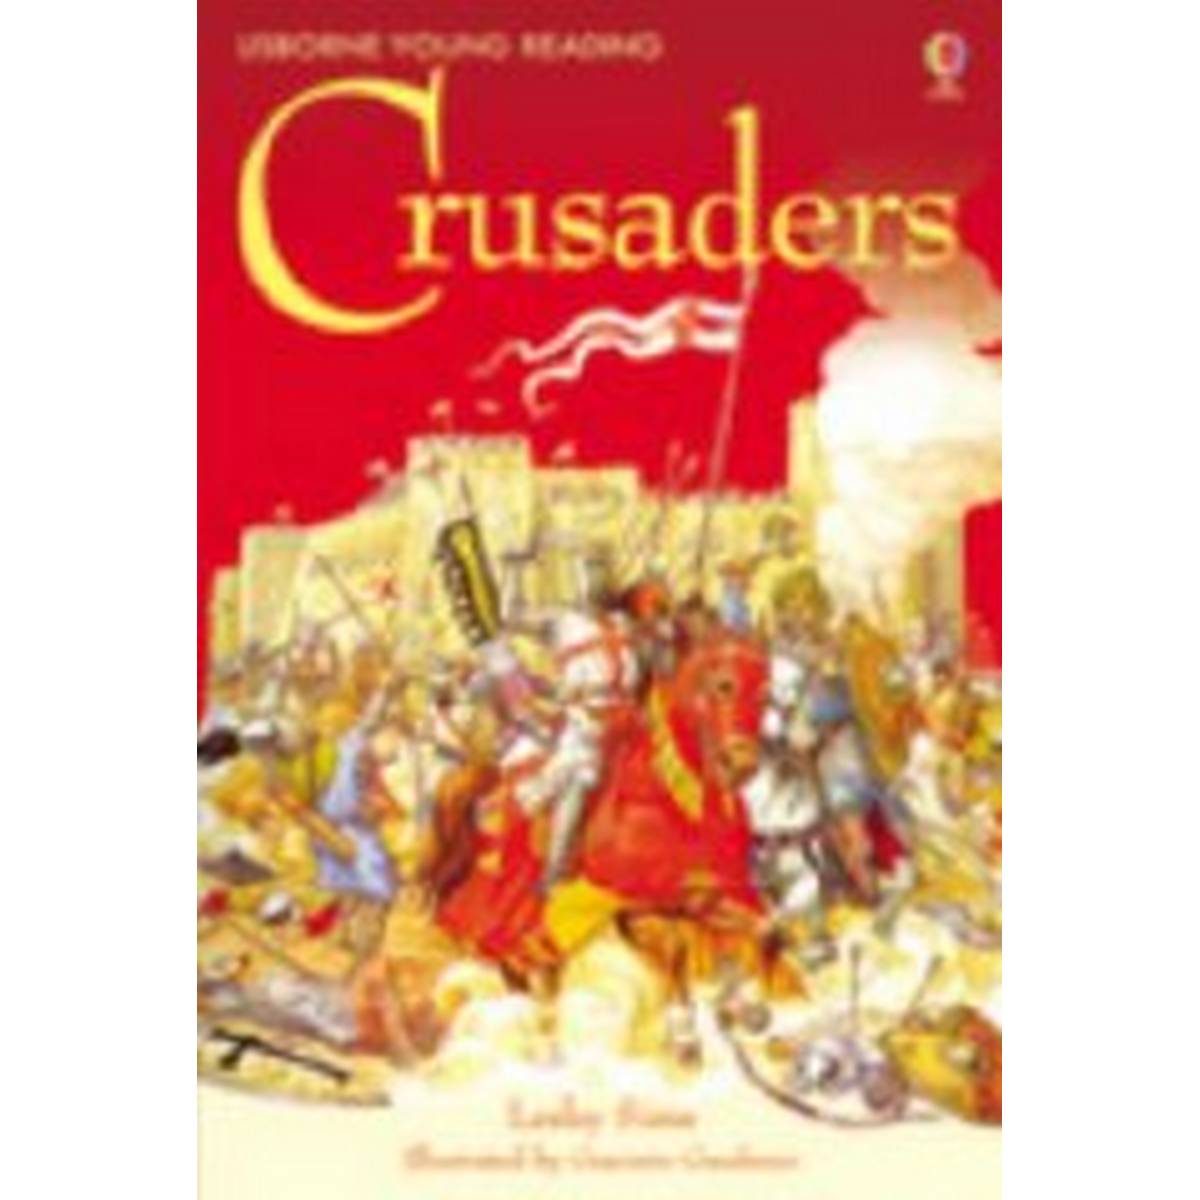 Crusaders (Young Reading Series 3)